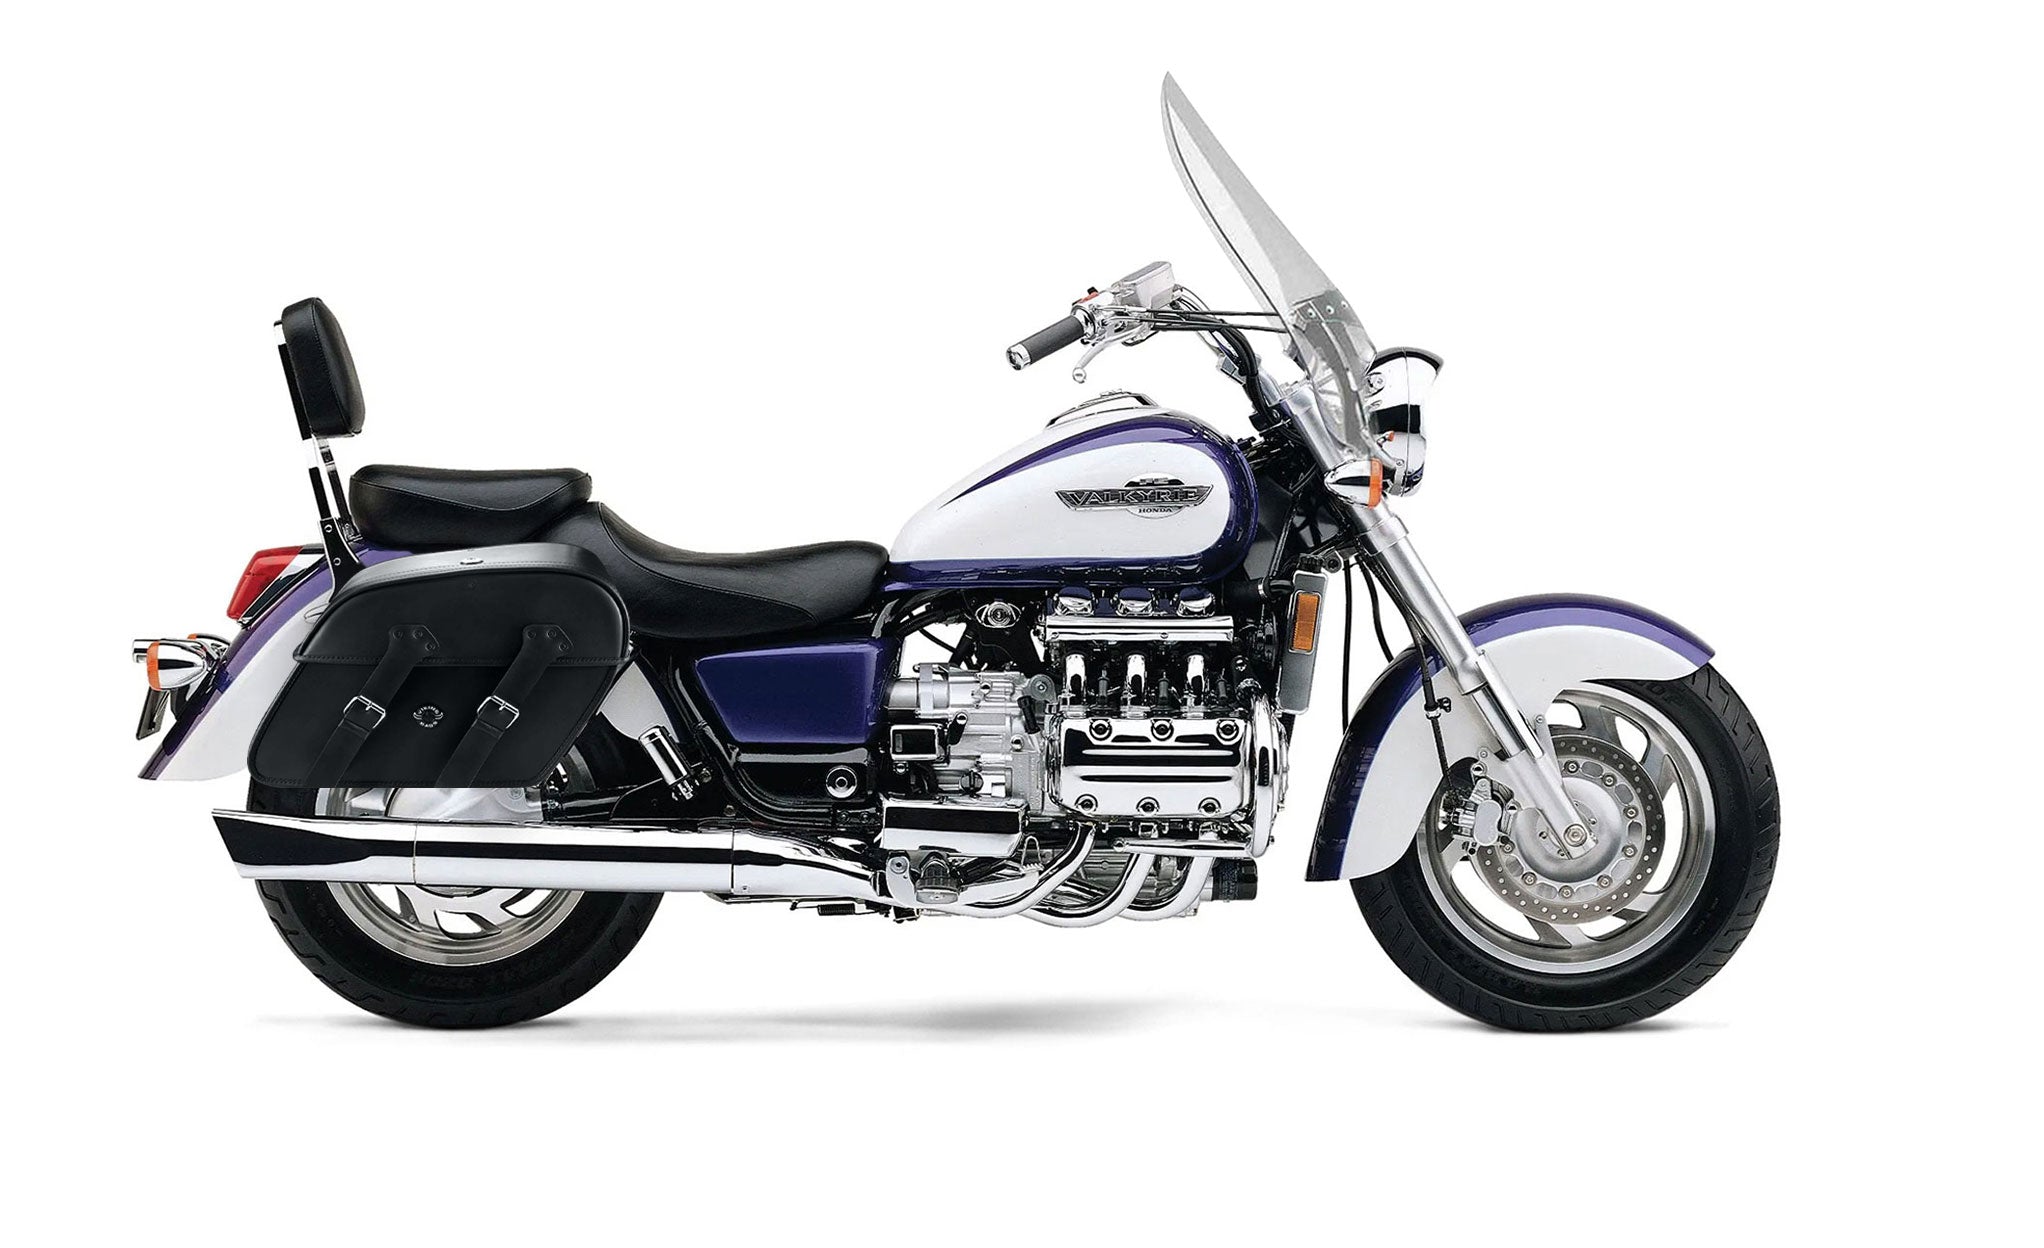 Viking Raven Extra Large Honda 1500 Valkyrie Tourer Shock Cut Out Leather Motorcycle Saddlebags on Bike Photo @expand